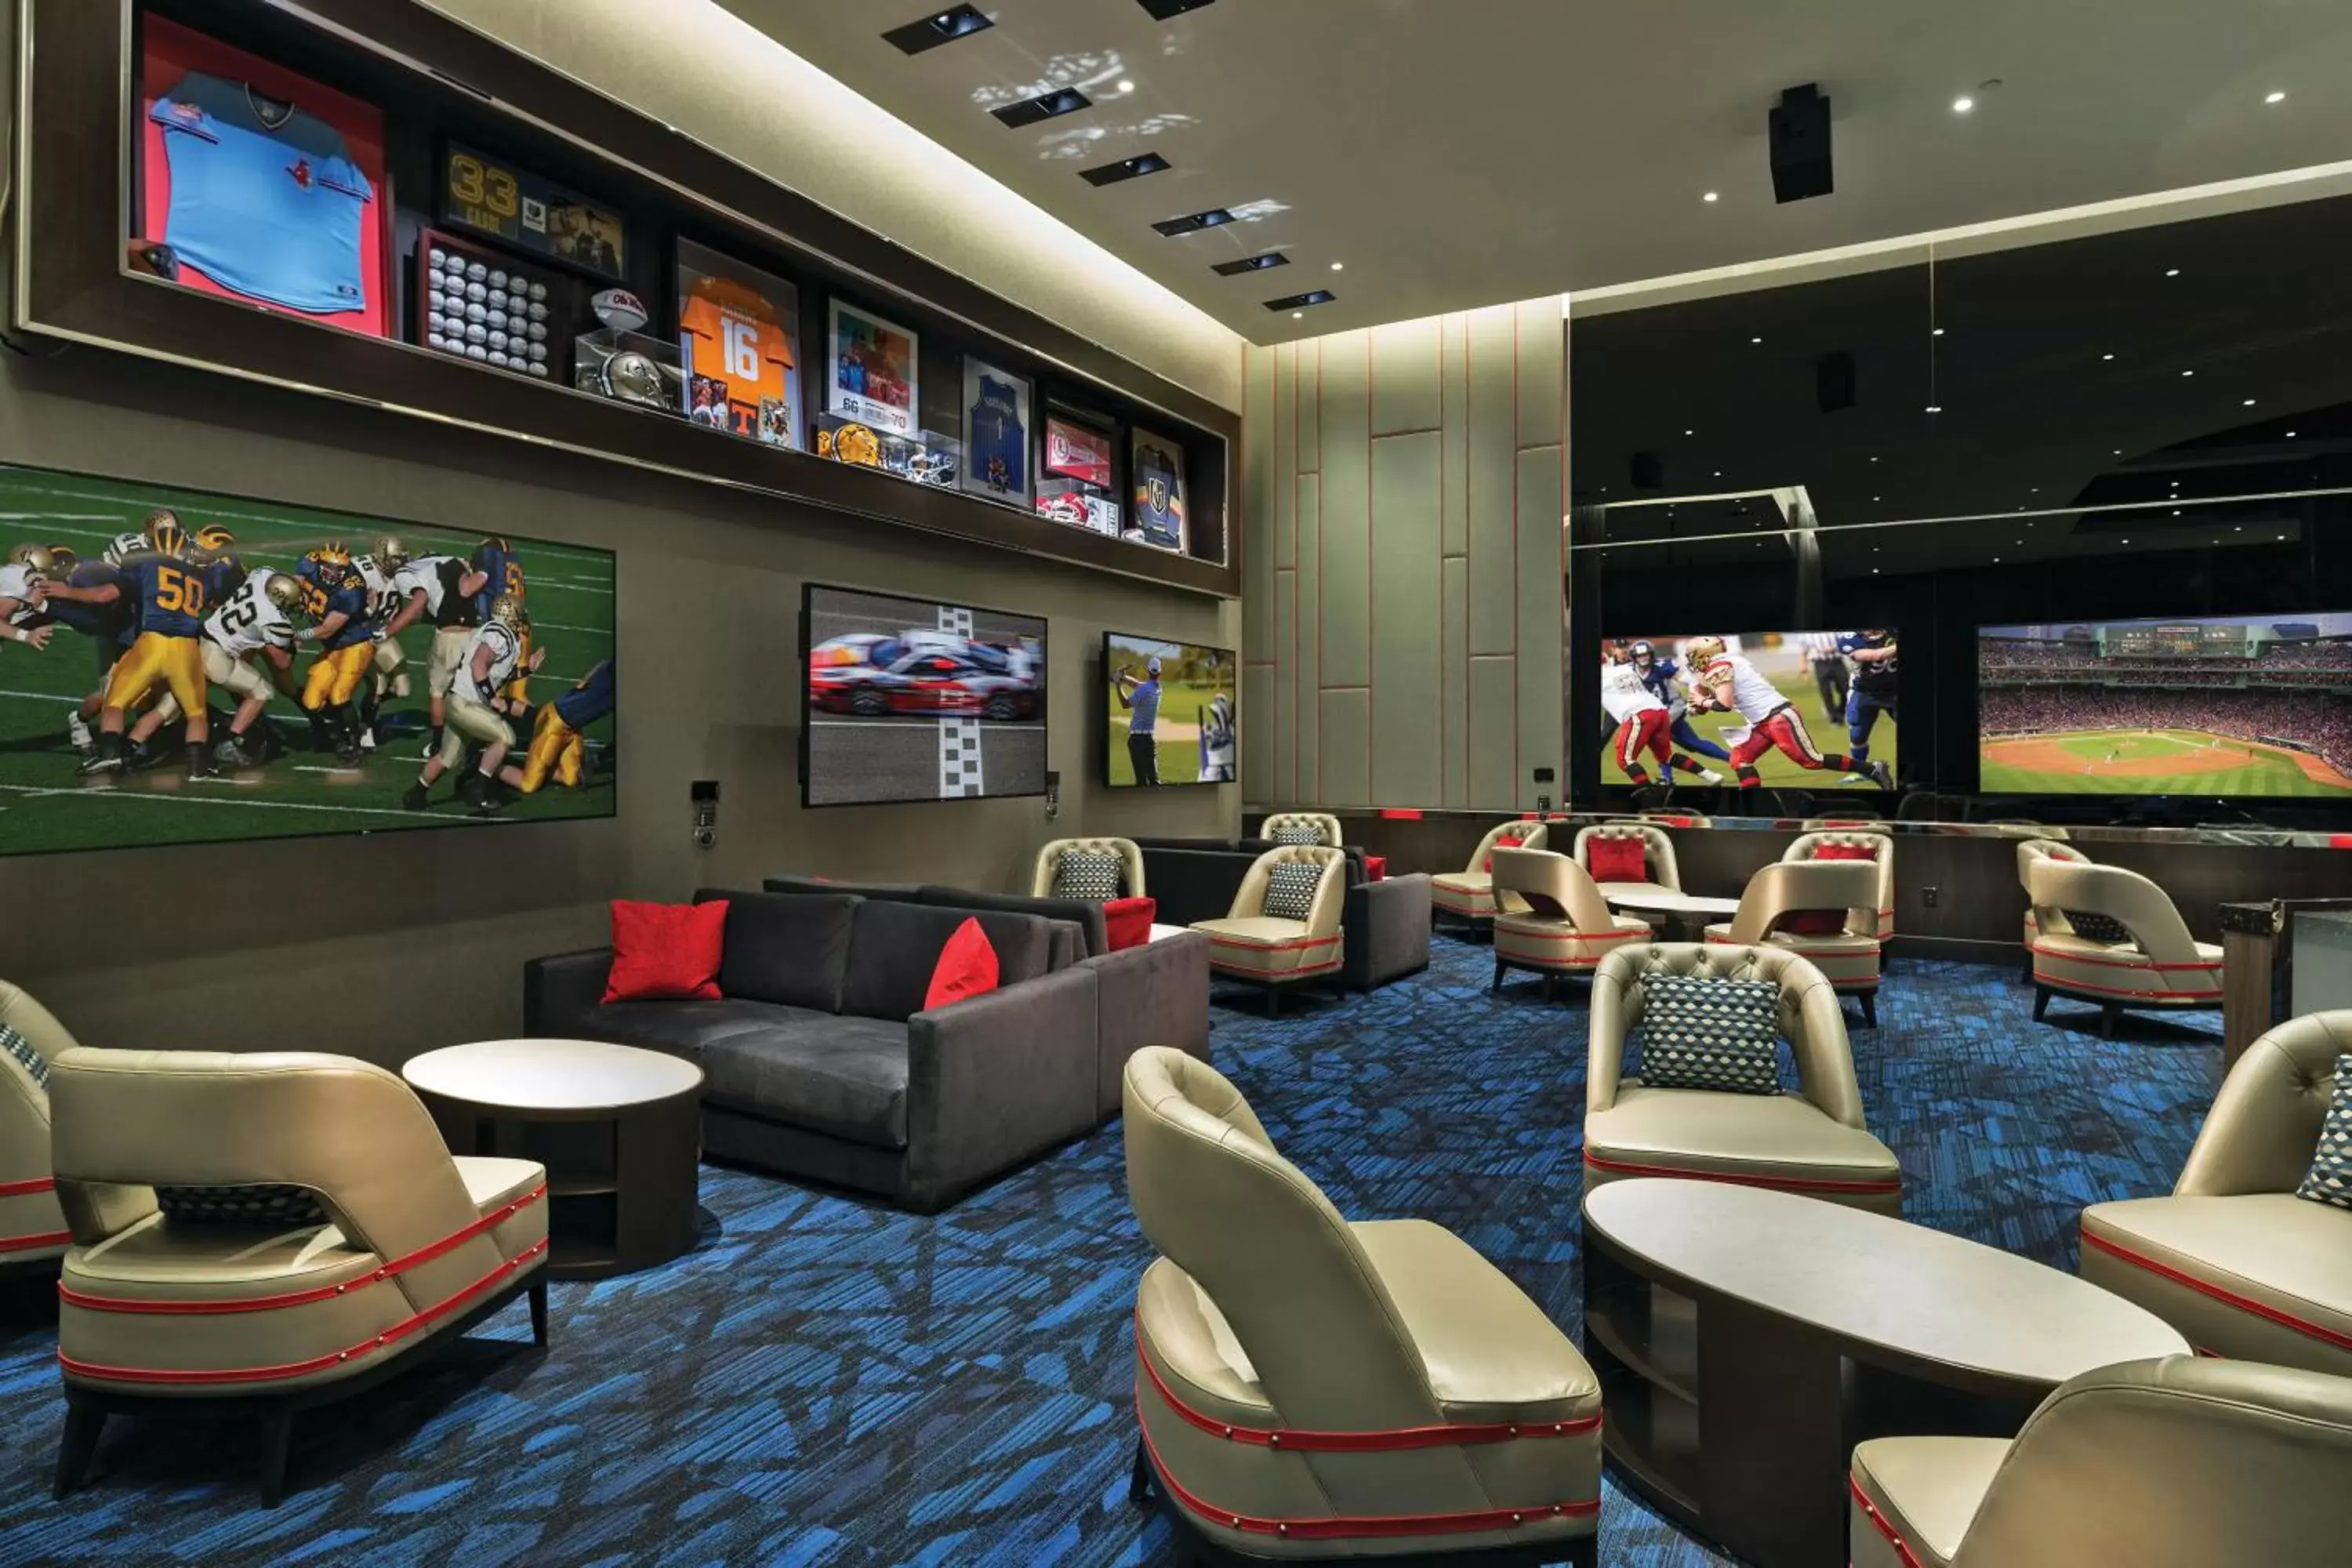 Game Room, Lounge/Bar in Gold Strike Casino Resort